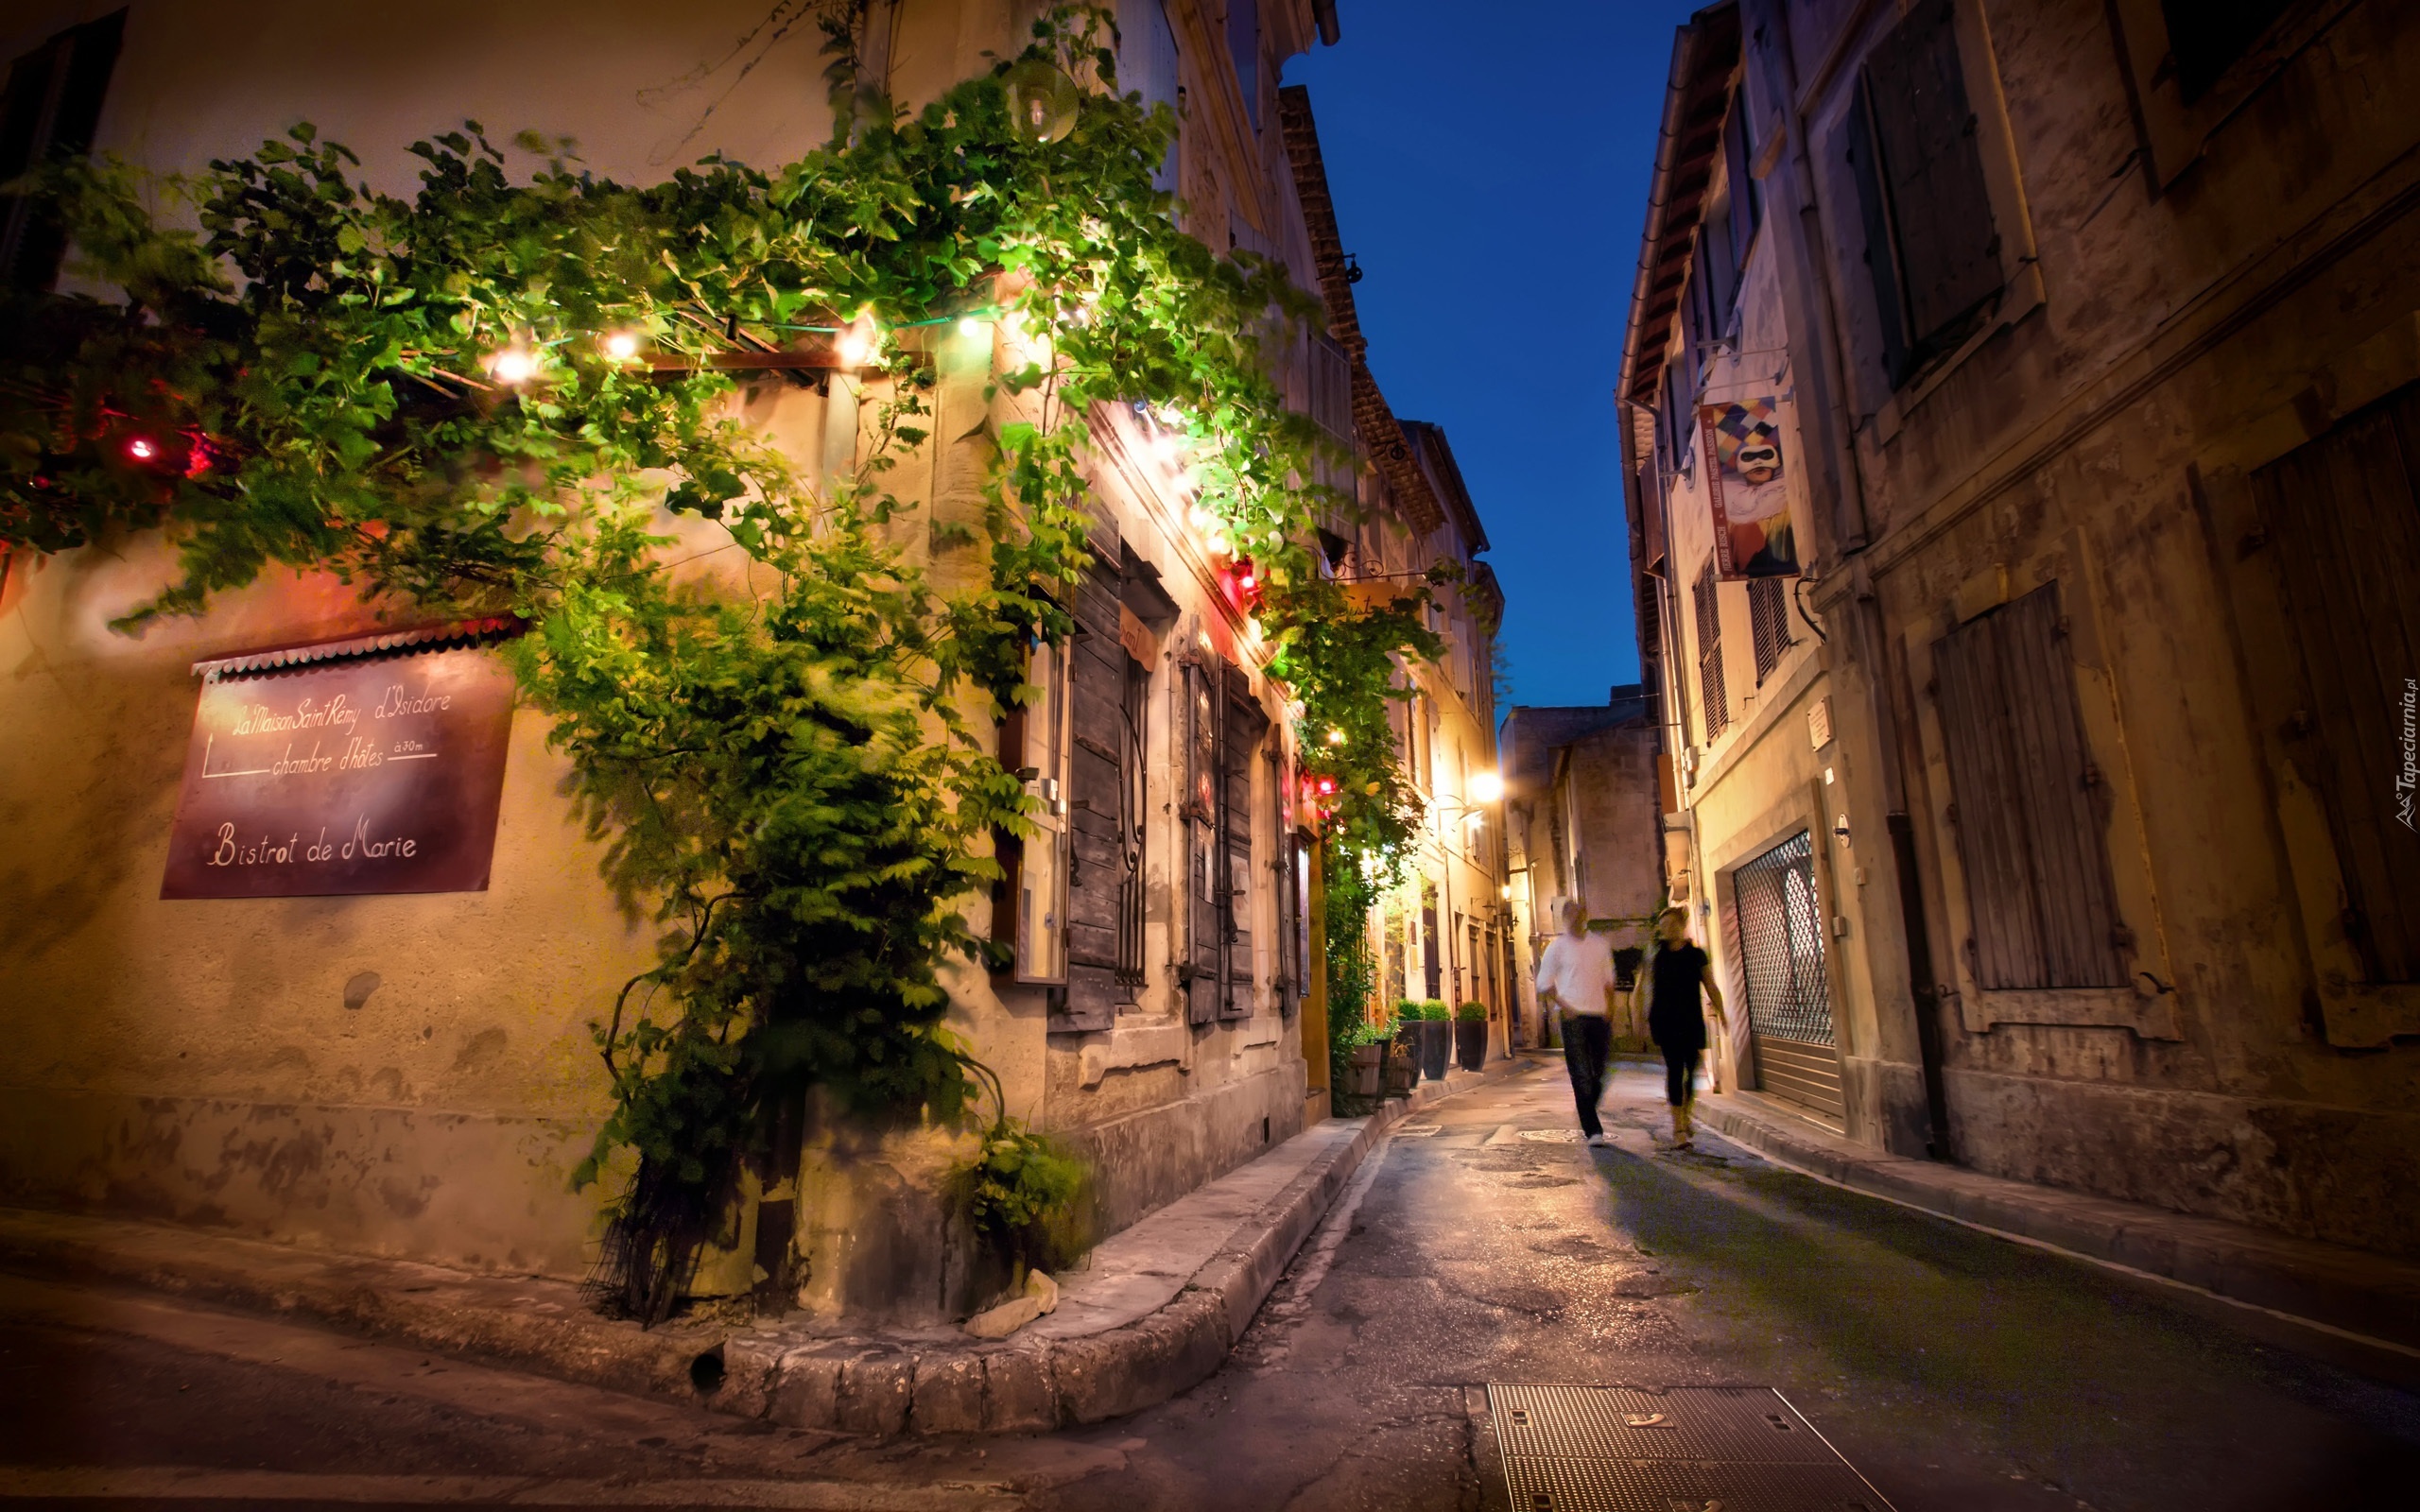 Domy, Ulica, Saint Remy De Provence, Francja